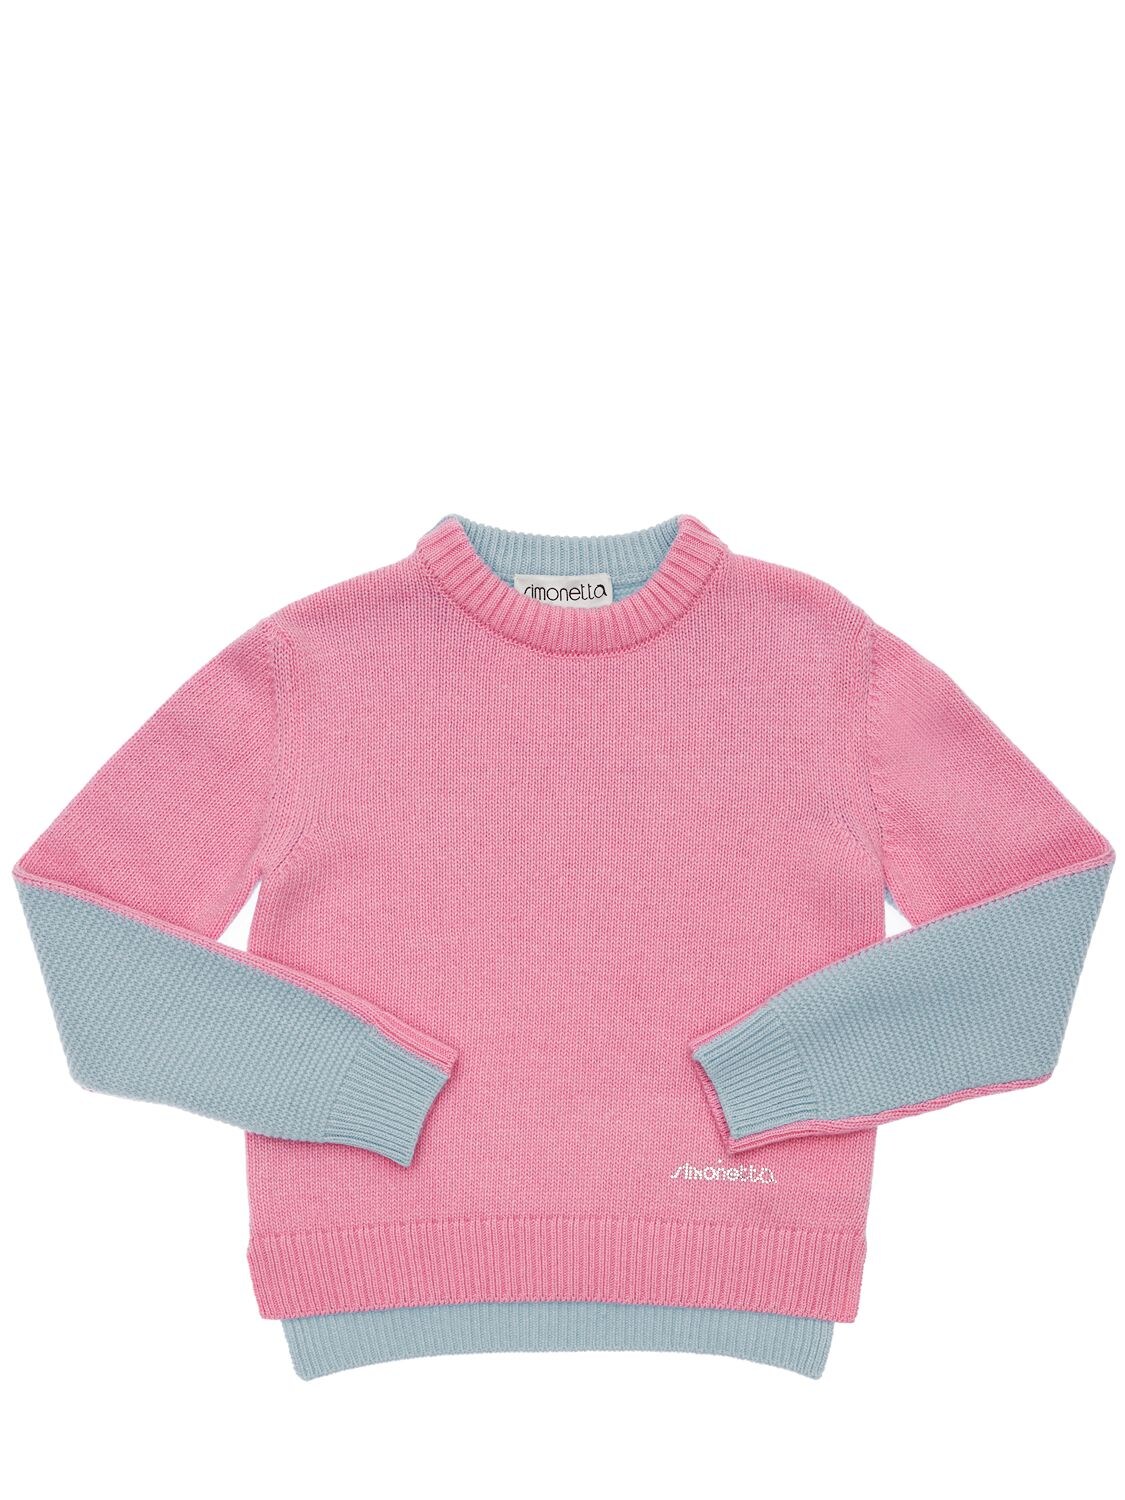 Simonetta Kids' Wool & Cashmere Knit Sweater In Pink,light Blue